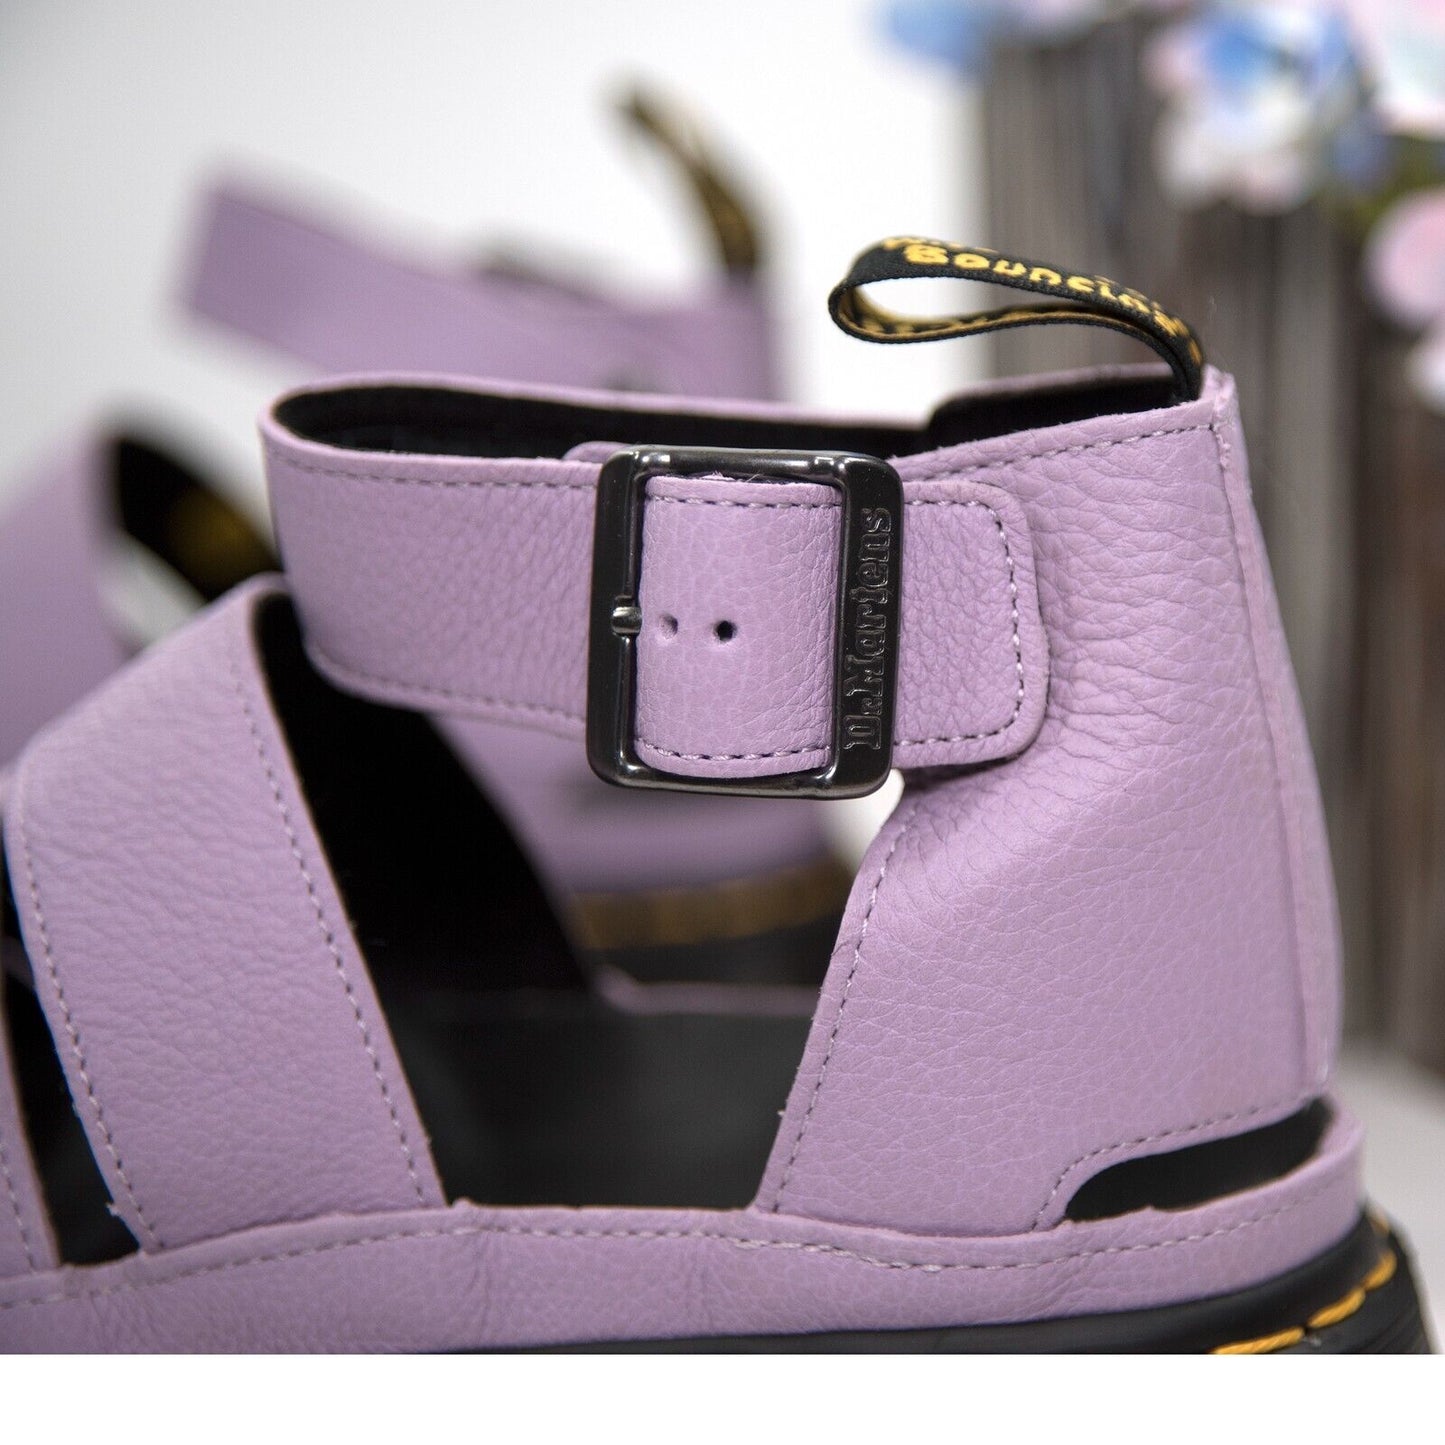 Dr. Martens Lilac Leather Clarissa 2 Quad Gladiator Sandal Shoes Size 9 NIB